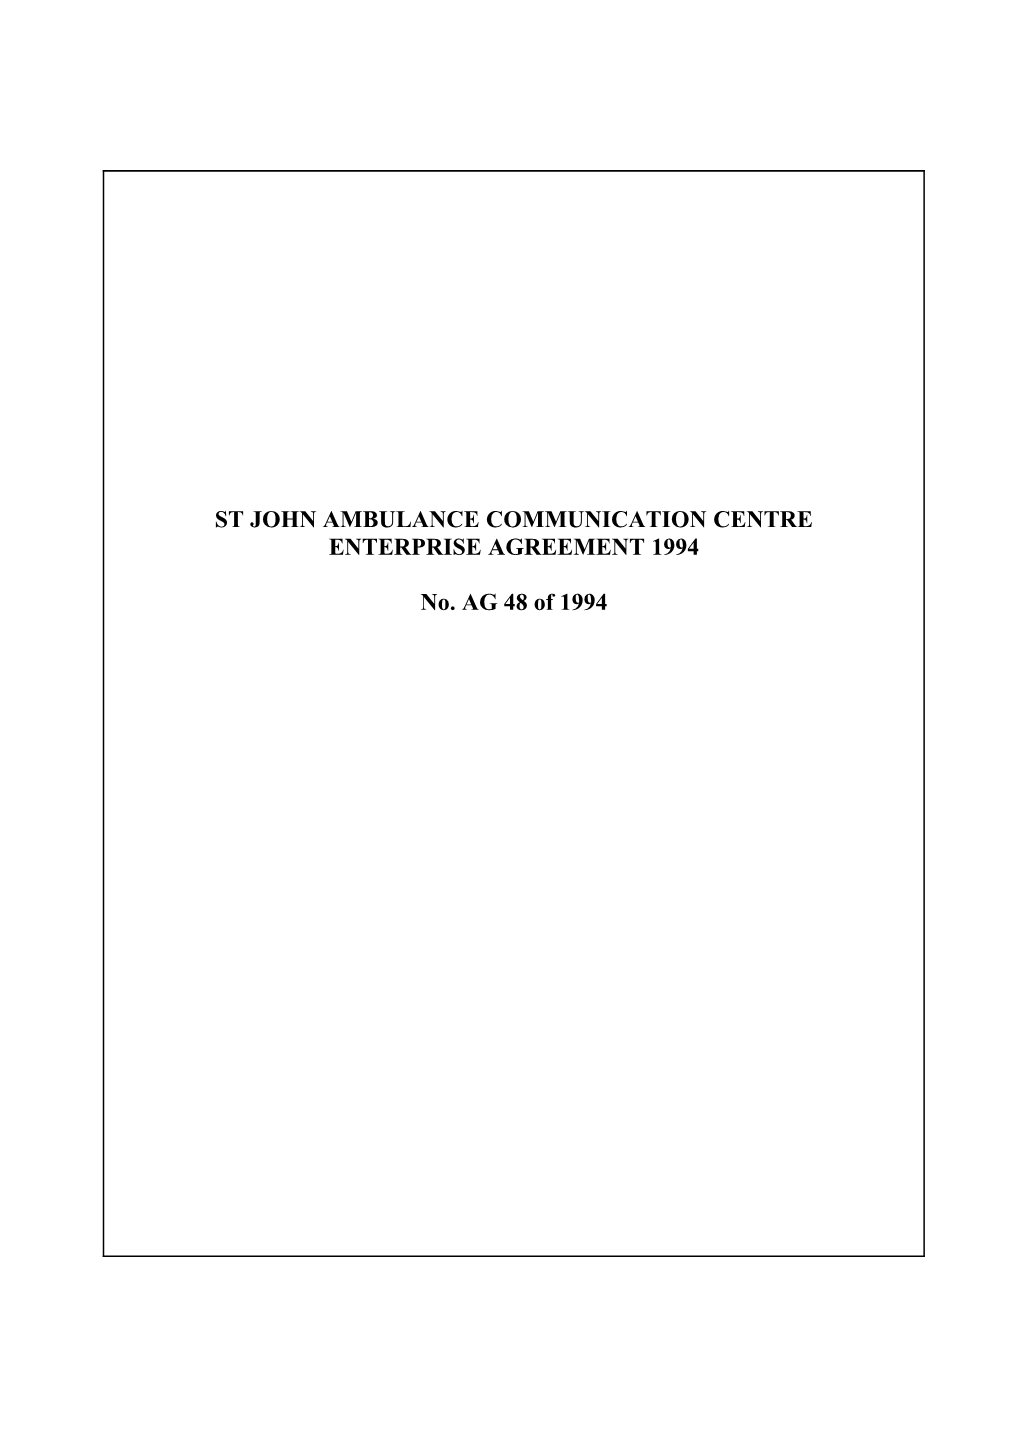 St John Ambulance Communication Centre Enterprise Agreement 1994